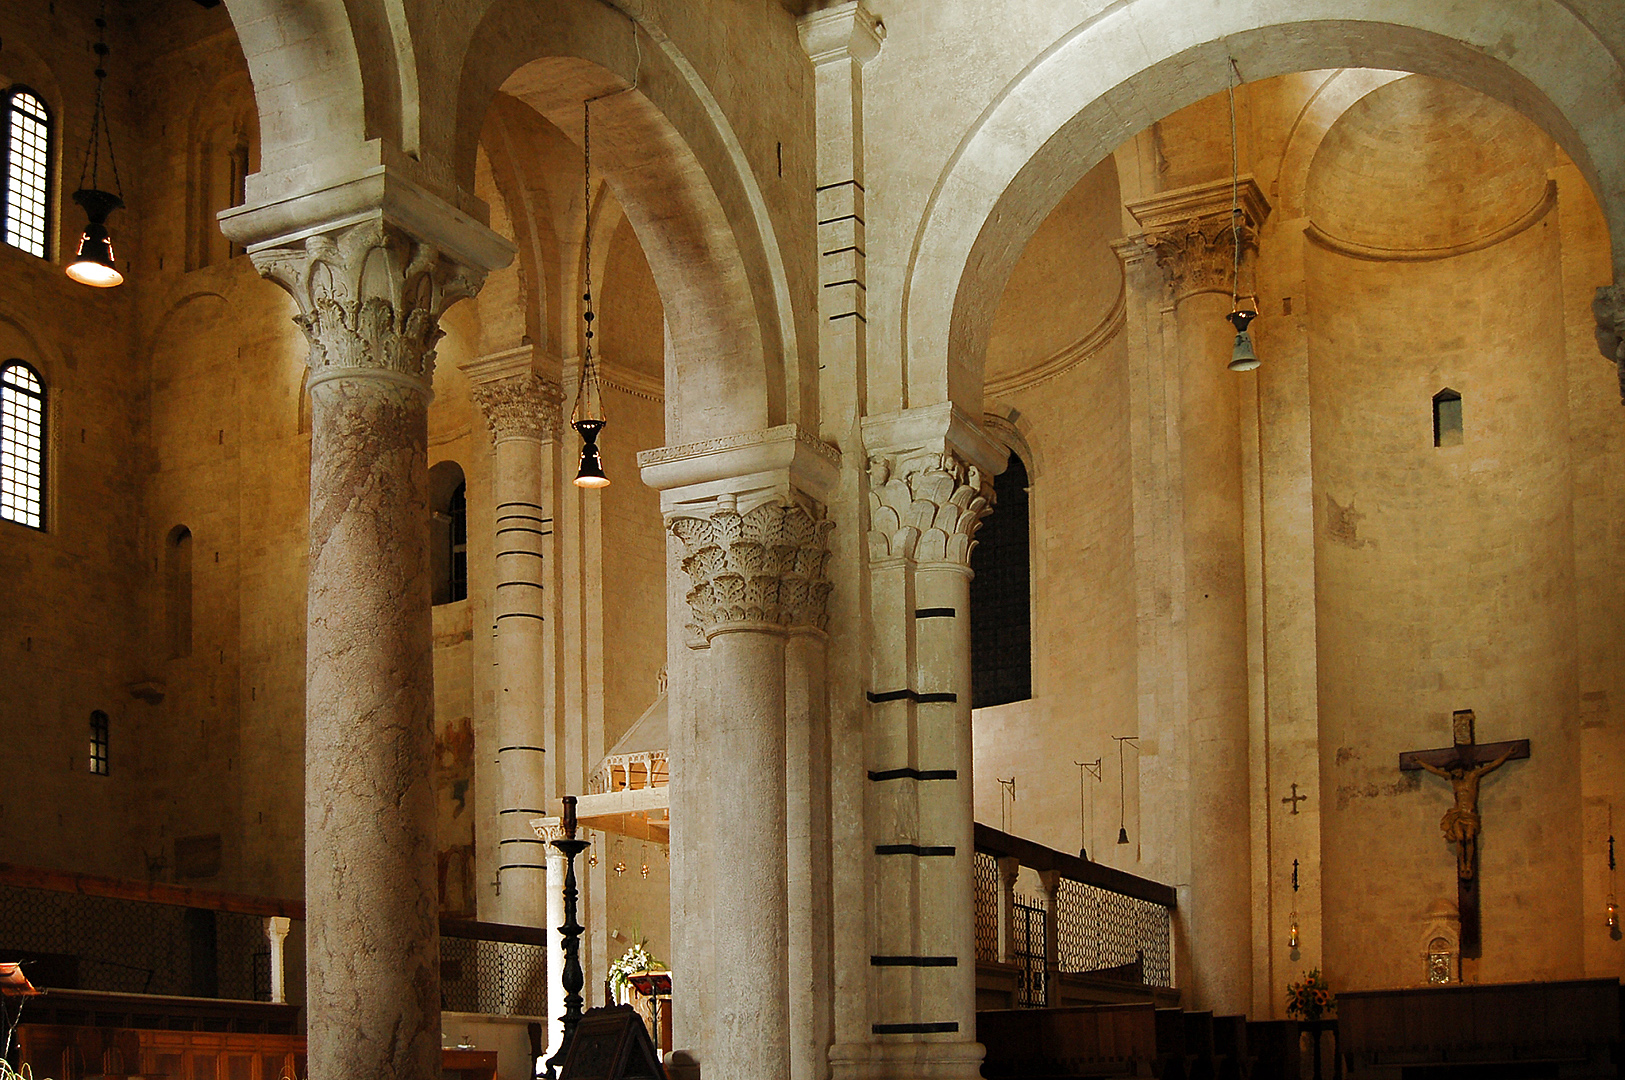 Kathedraal van Bari (Apuli, Itali); Bari Cathedral (Apulia, Italy)